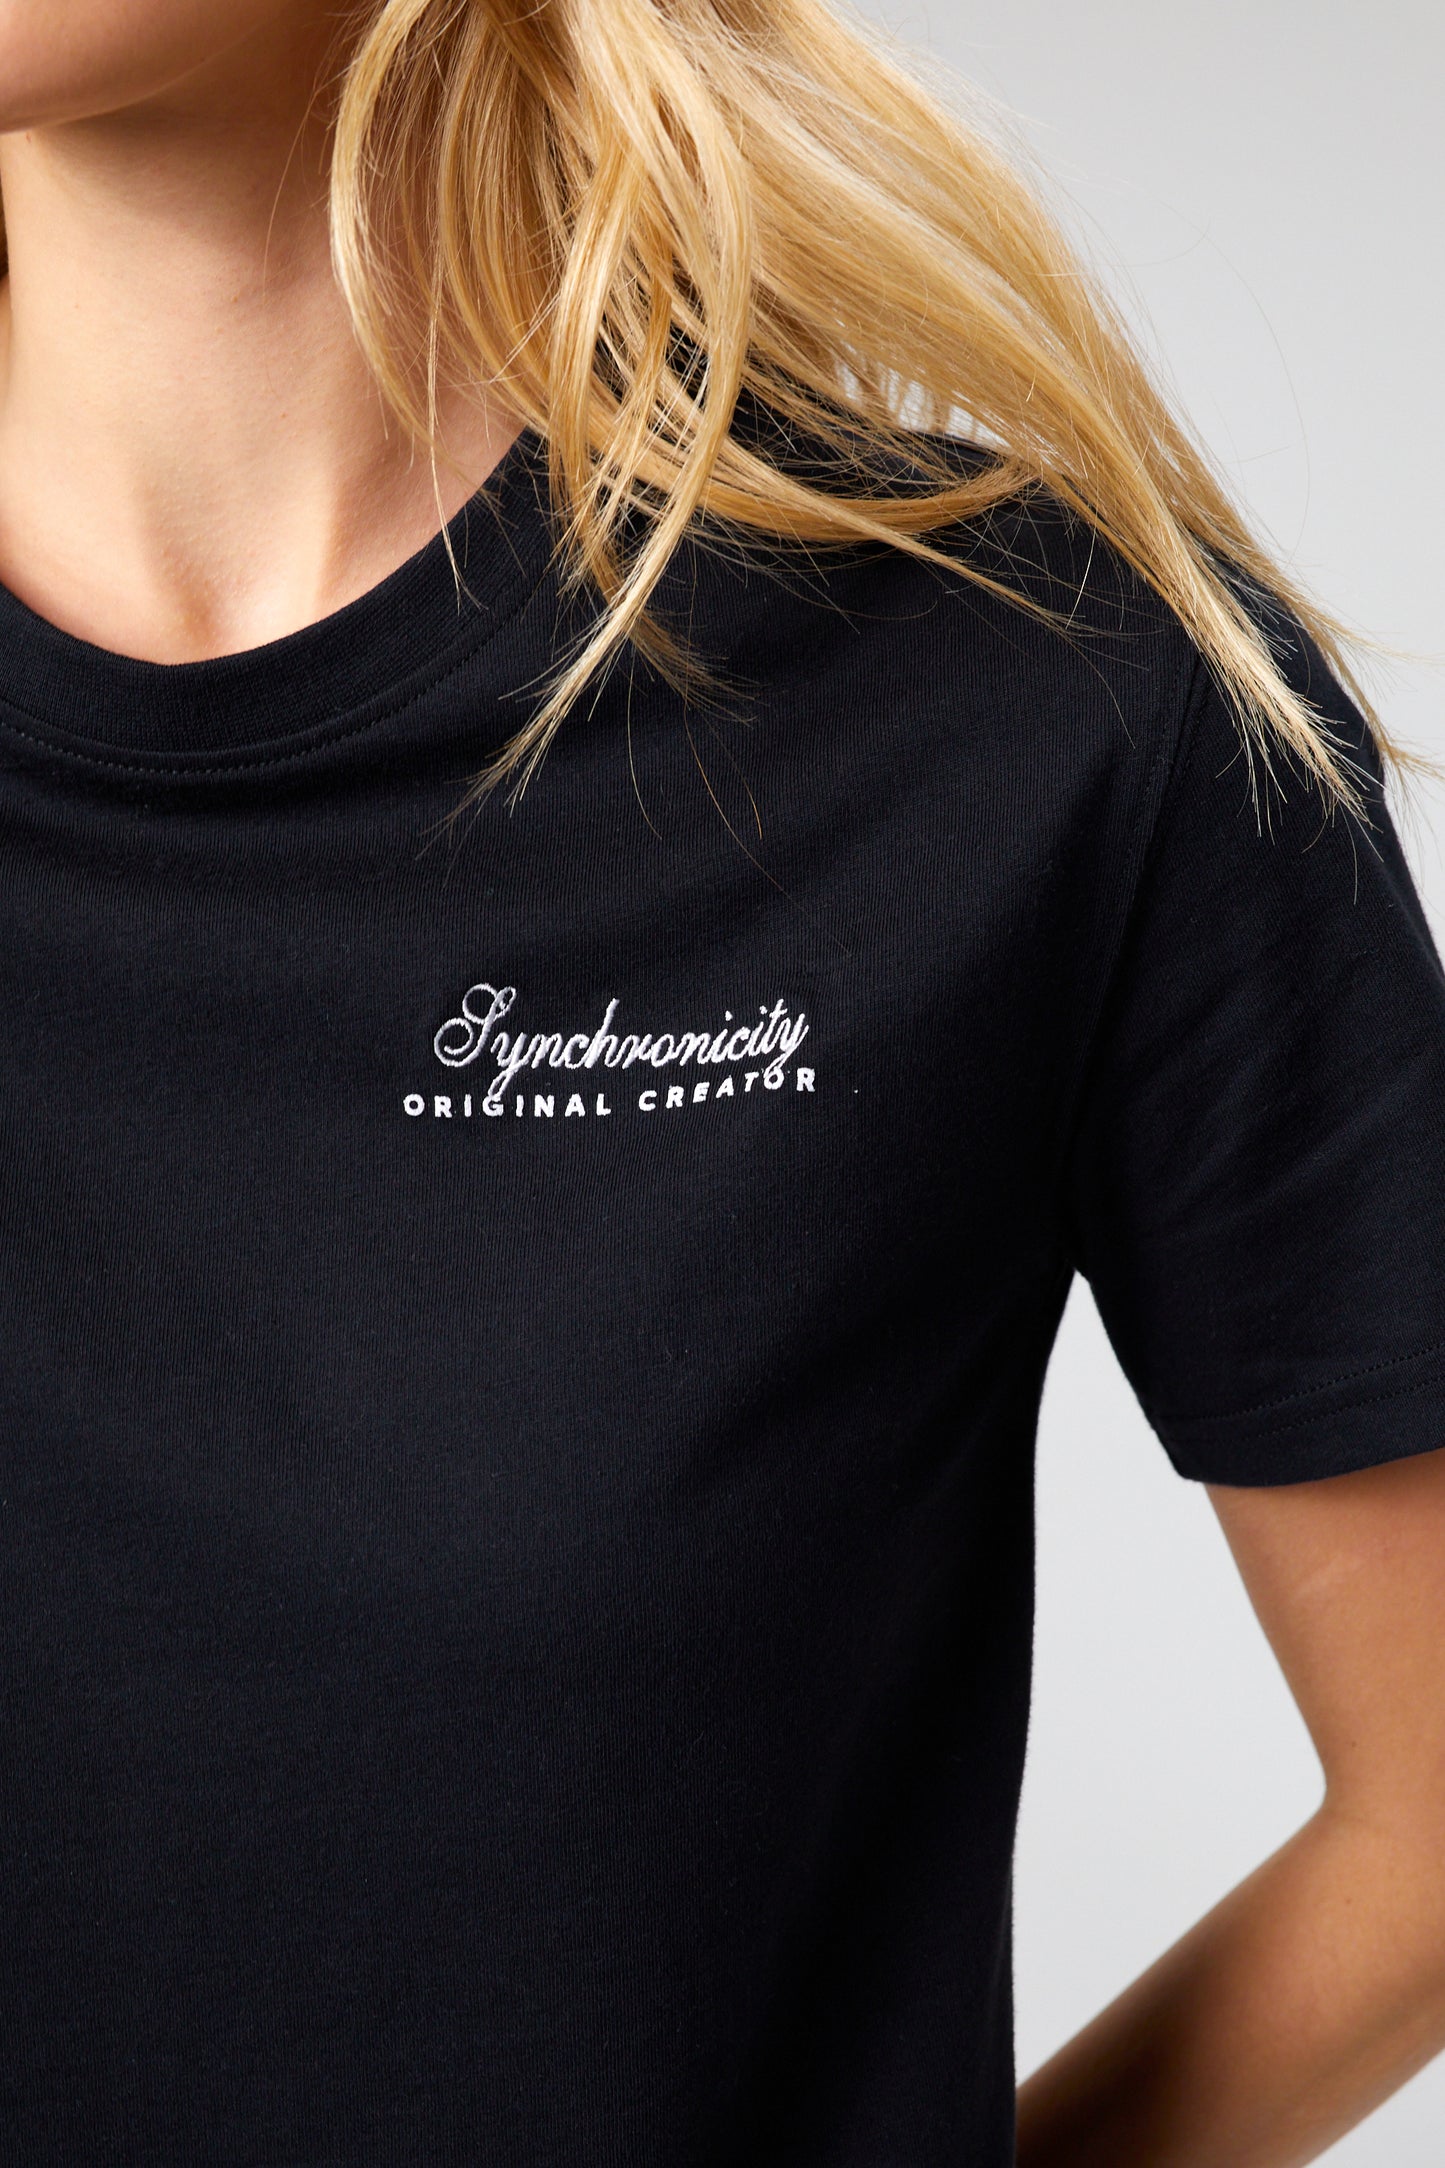 Synchronicity T-shirt - Jet Black